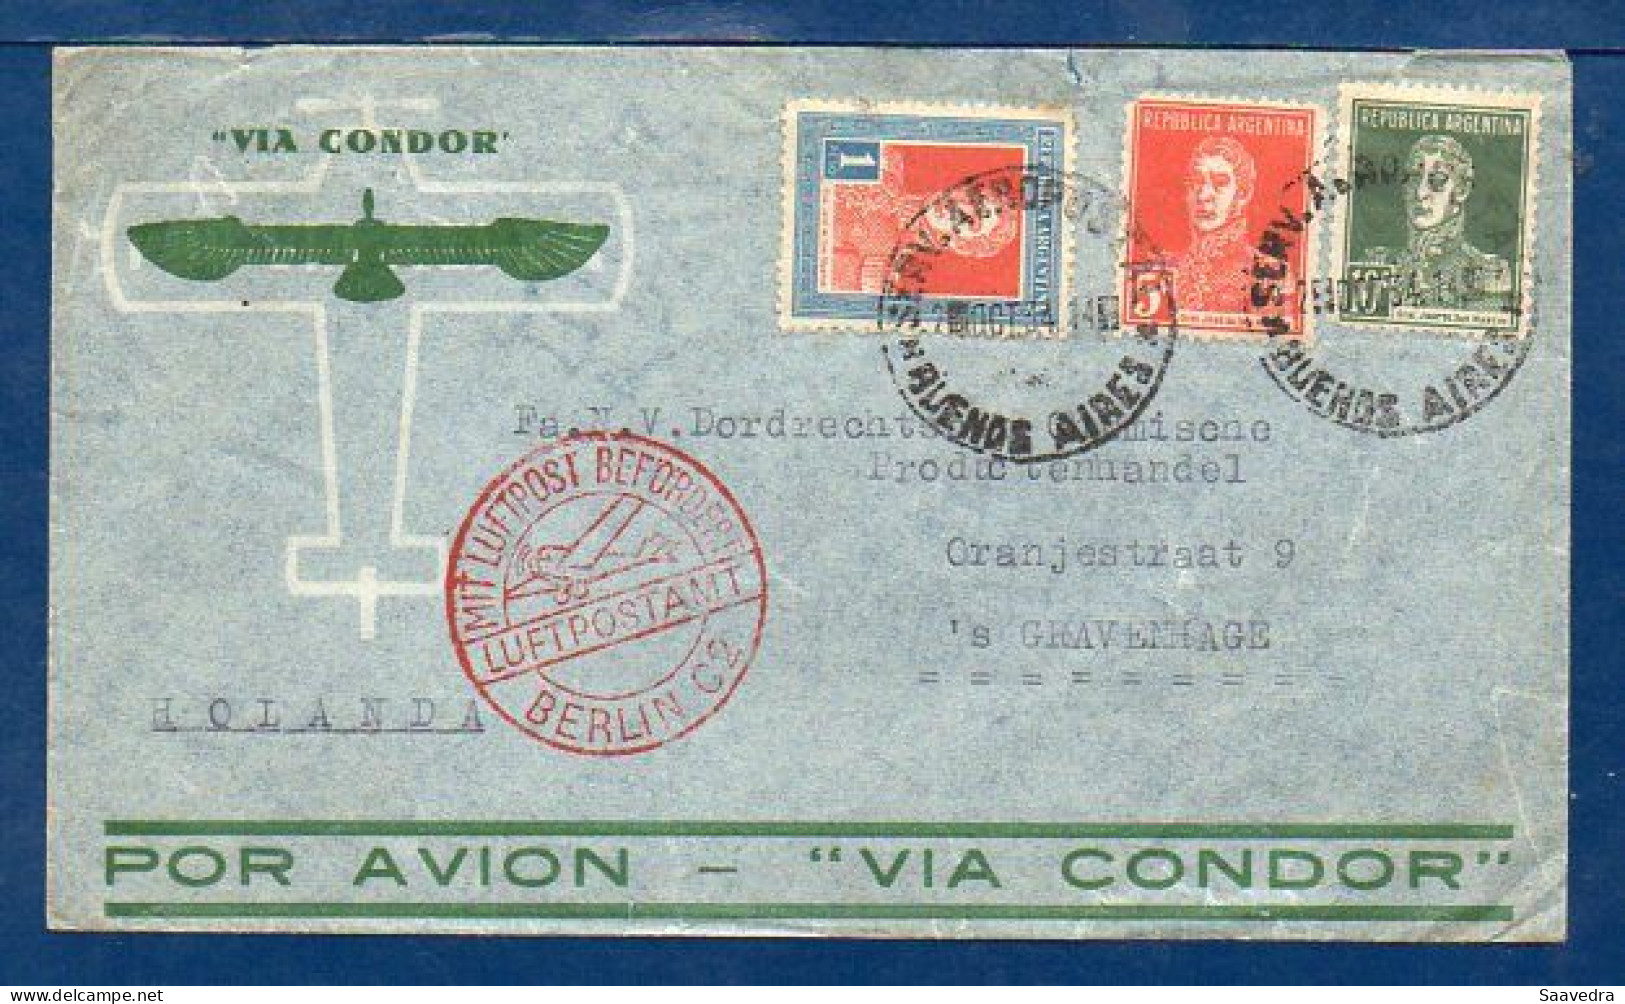 Argentina To Netherland, 1935, Via ZEPPELIN Flight G-409, SEE DESCRIPTION   (050) - Airmail